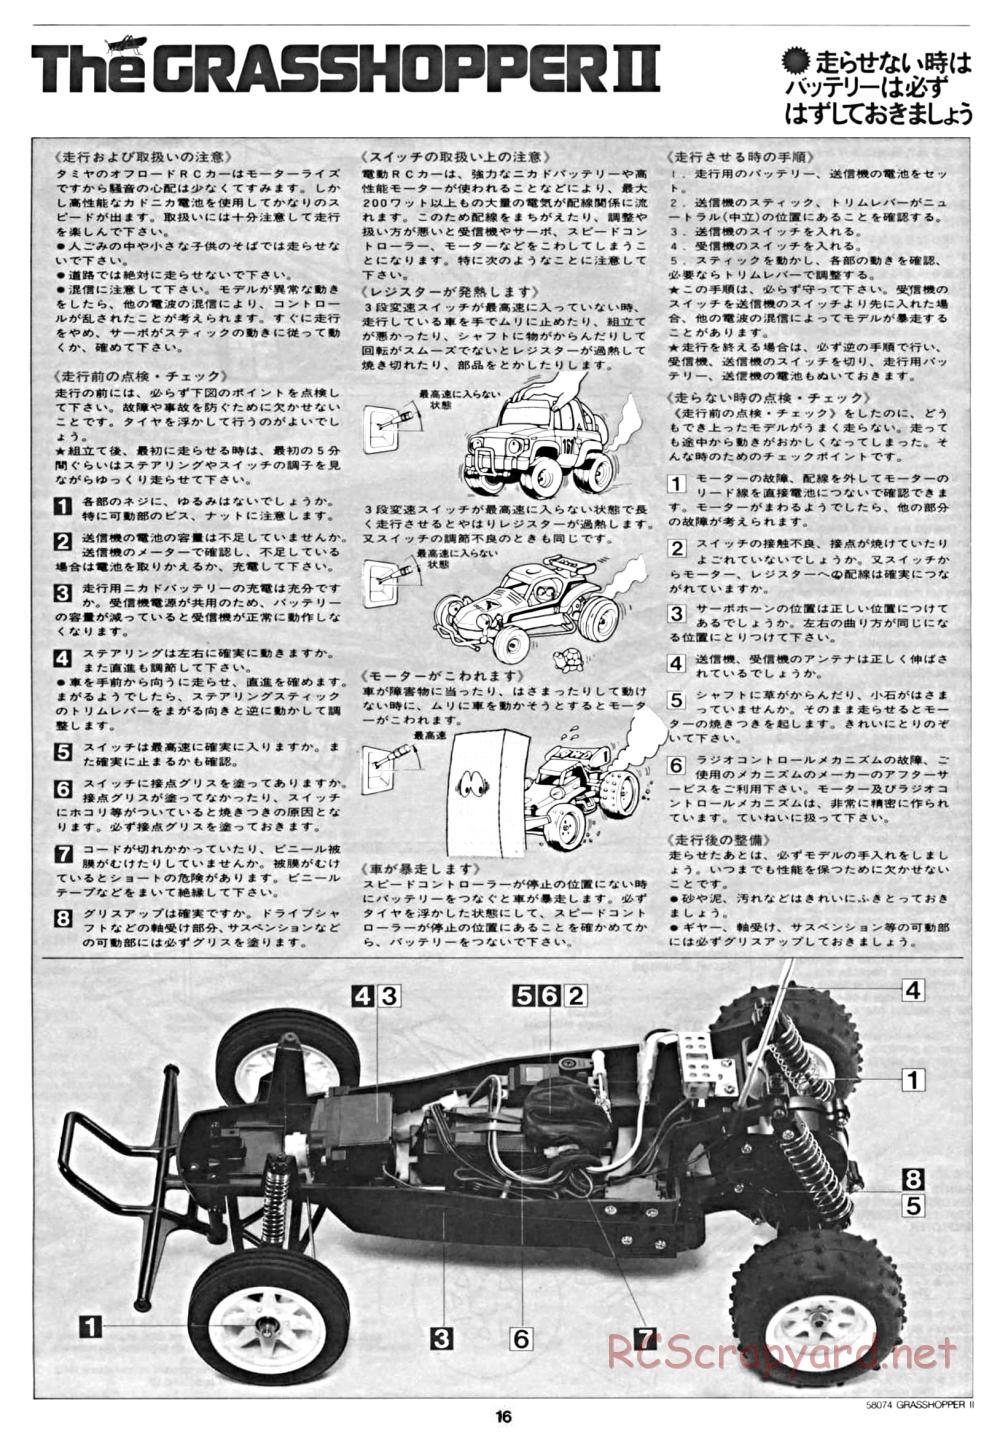 Tamiya - The Grasshopper II - 58074 - Manual - Page 16